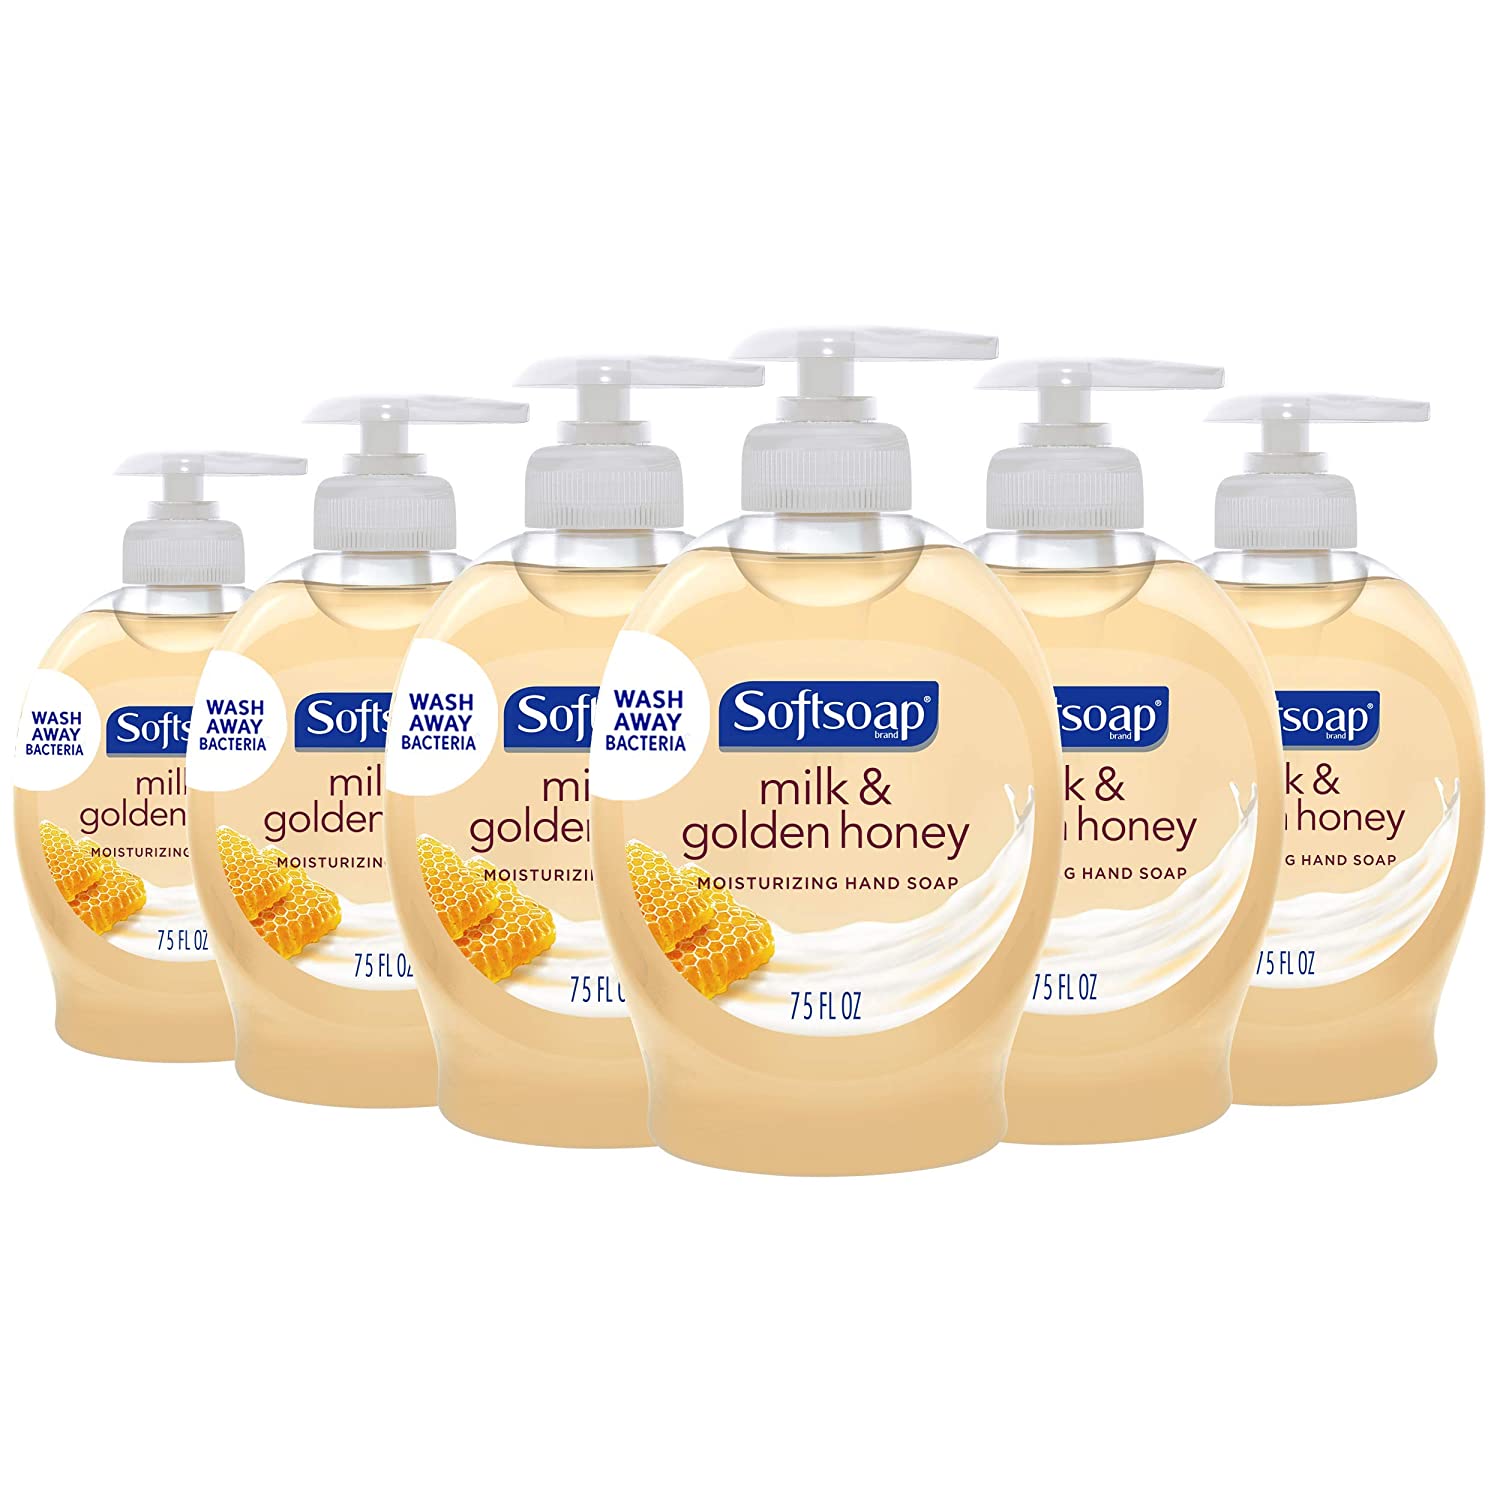 Softsoap Moisturizing Liquid Hand Soap, Milk and Honey - 7.5 Fluid Ounce (6 Pack) S&S $5.59